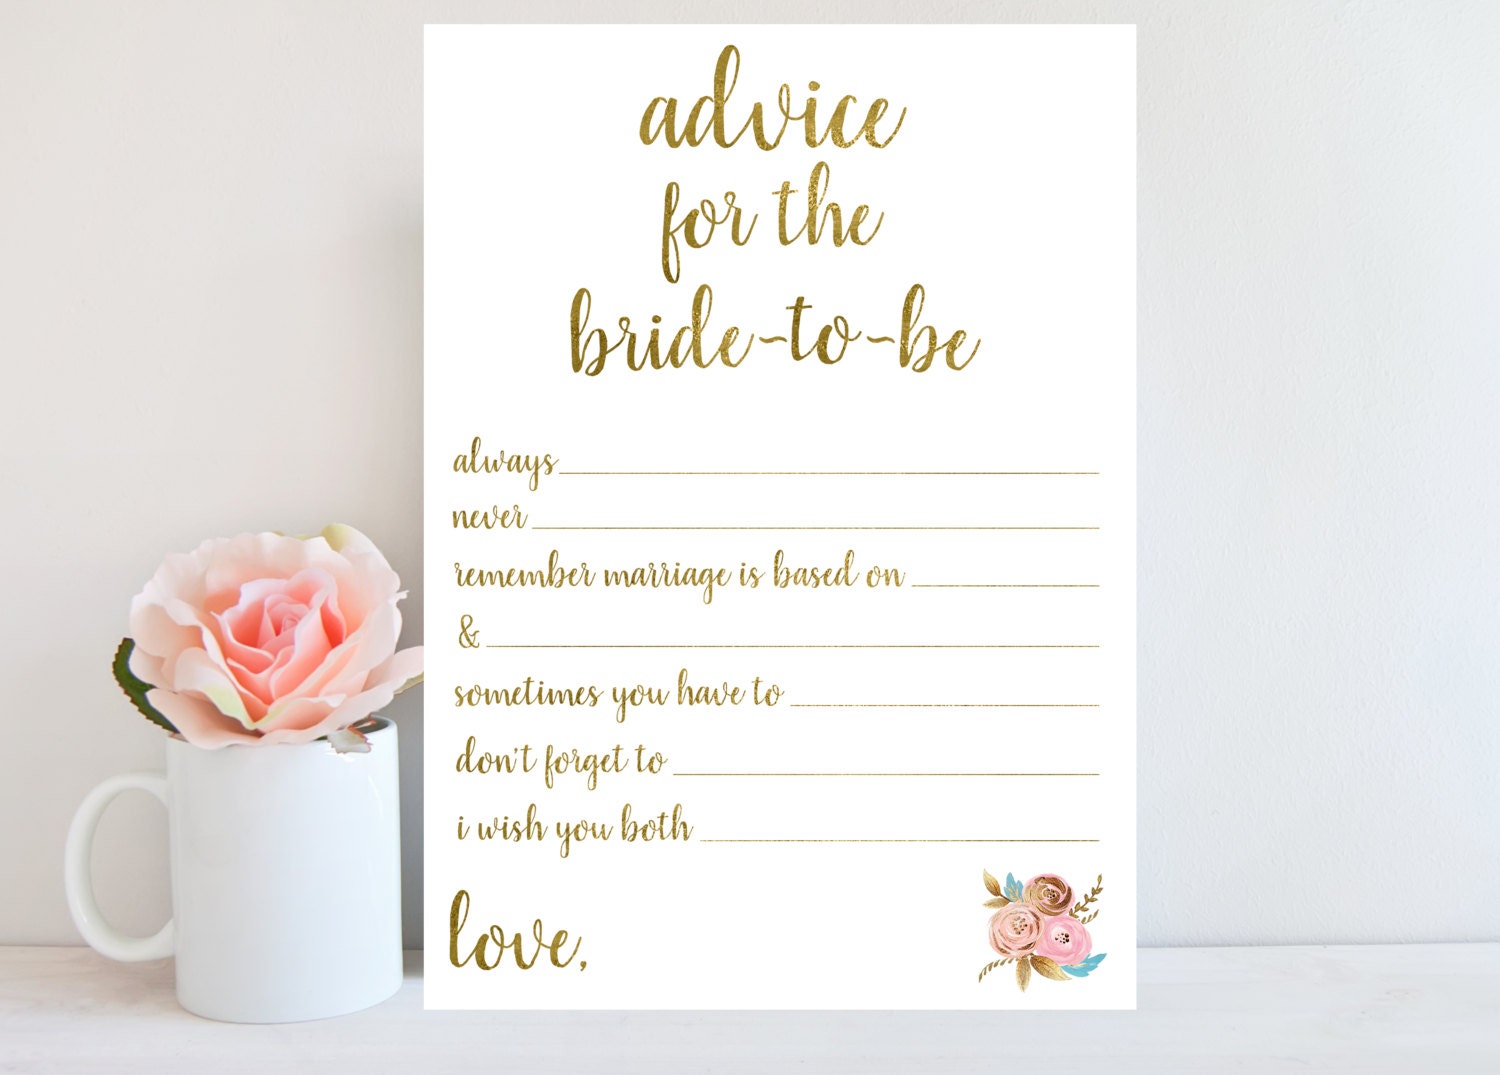 Advice for BridetoBe Bridal Shower Advice Cards Printable